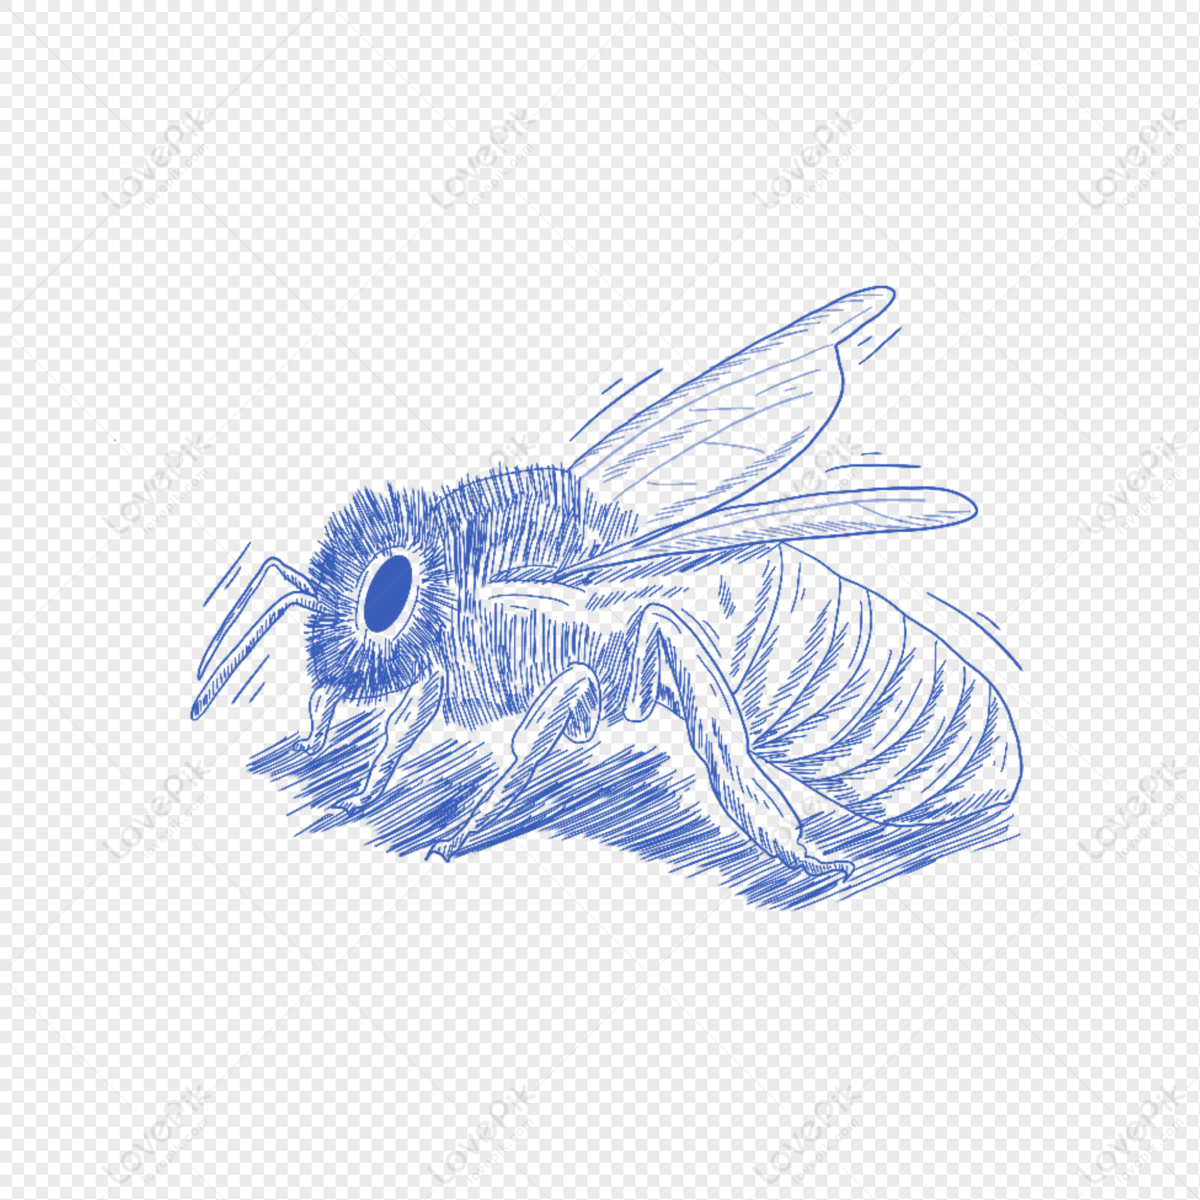 Sketching and Drawing Bees